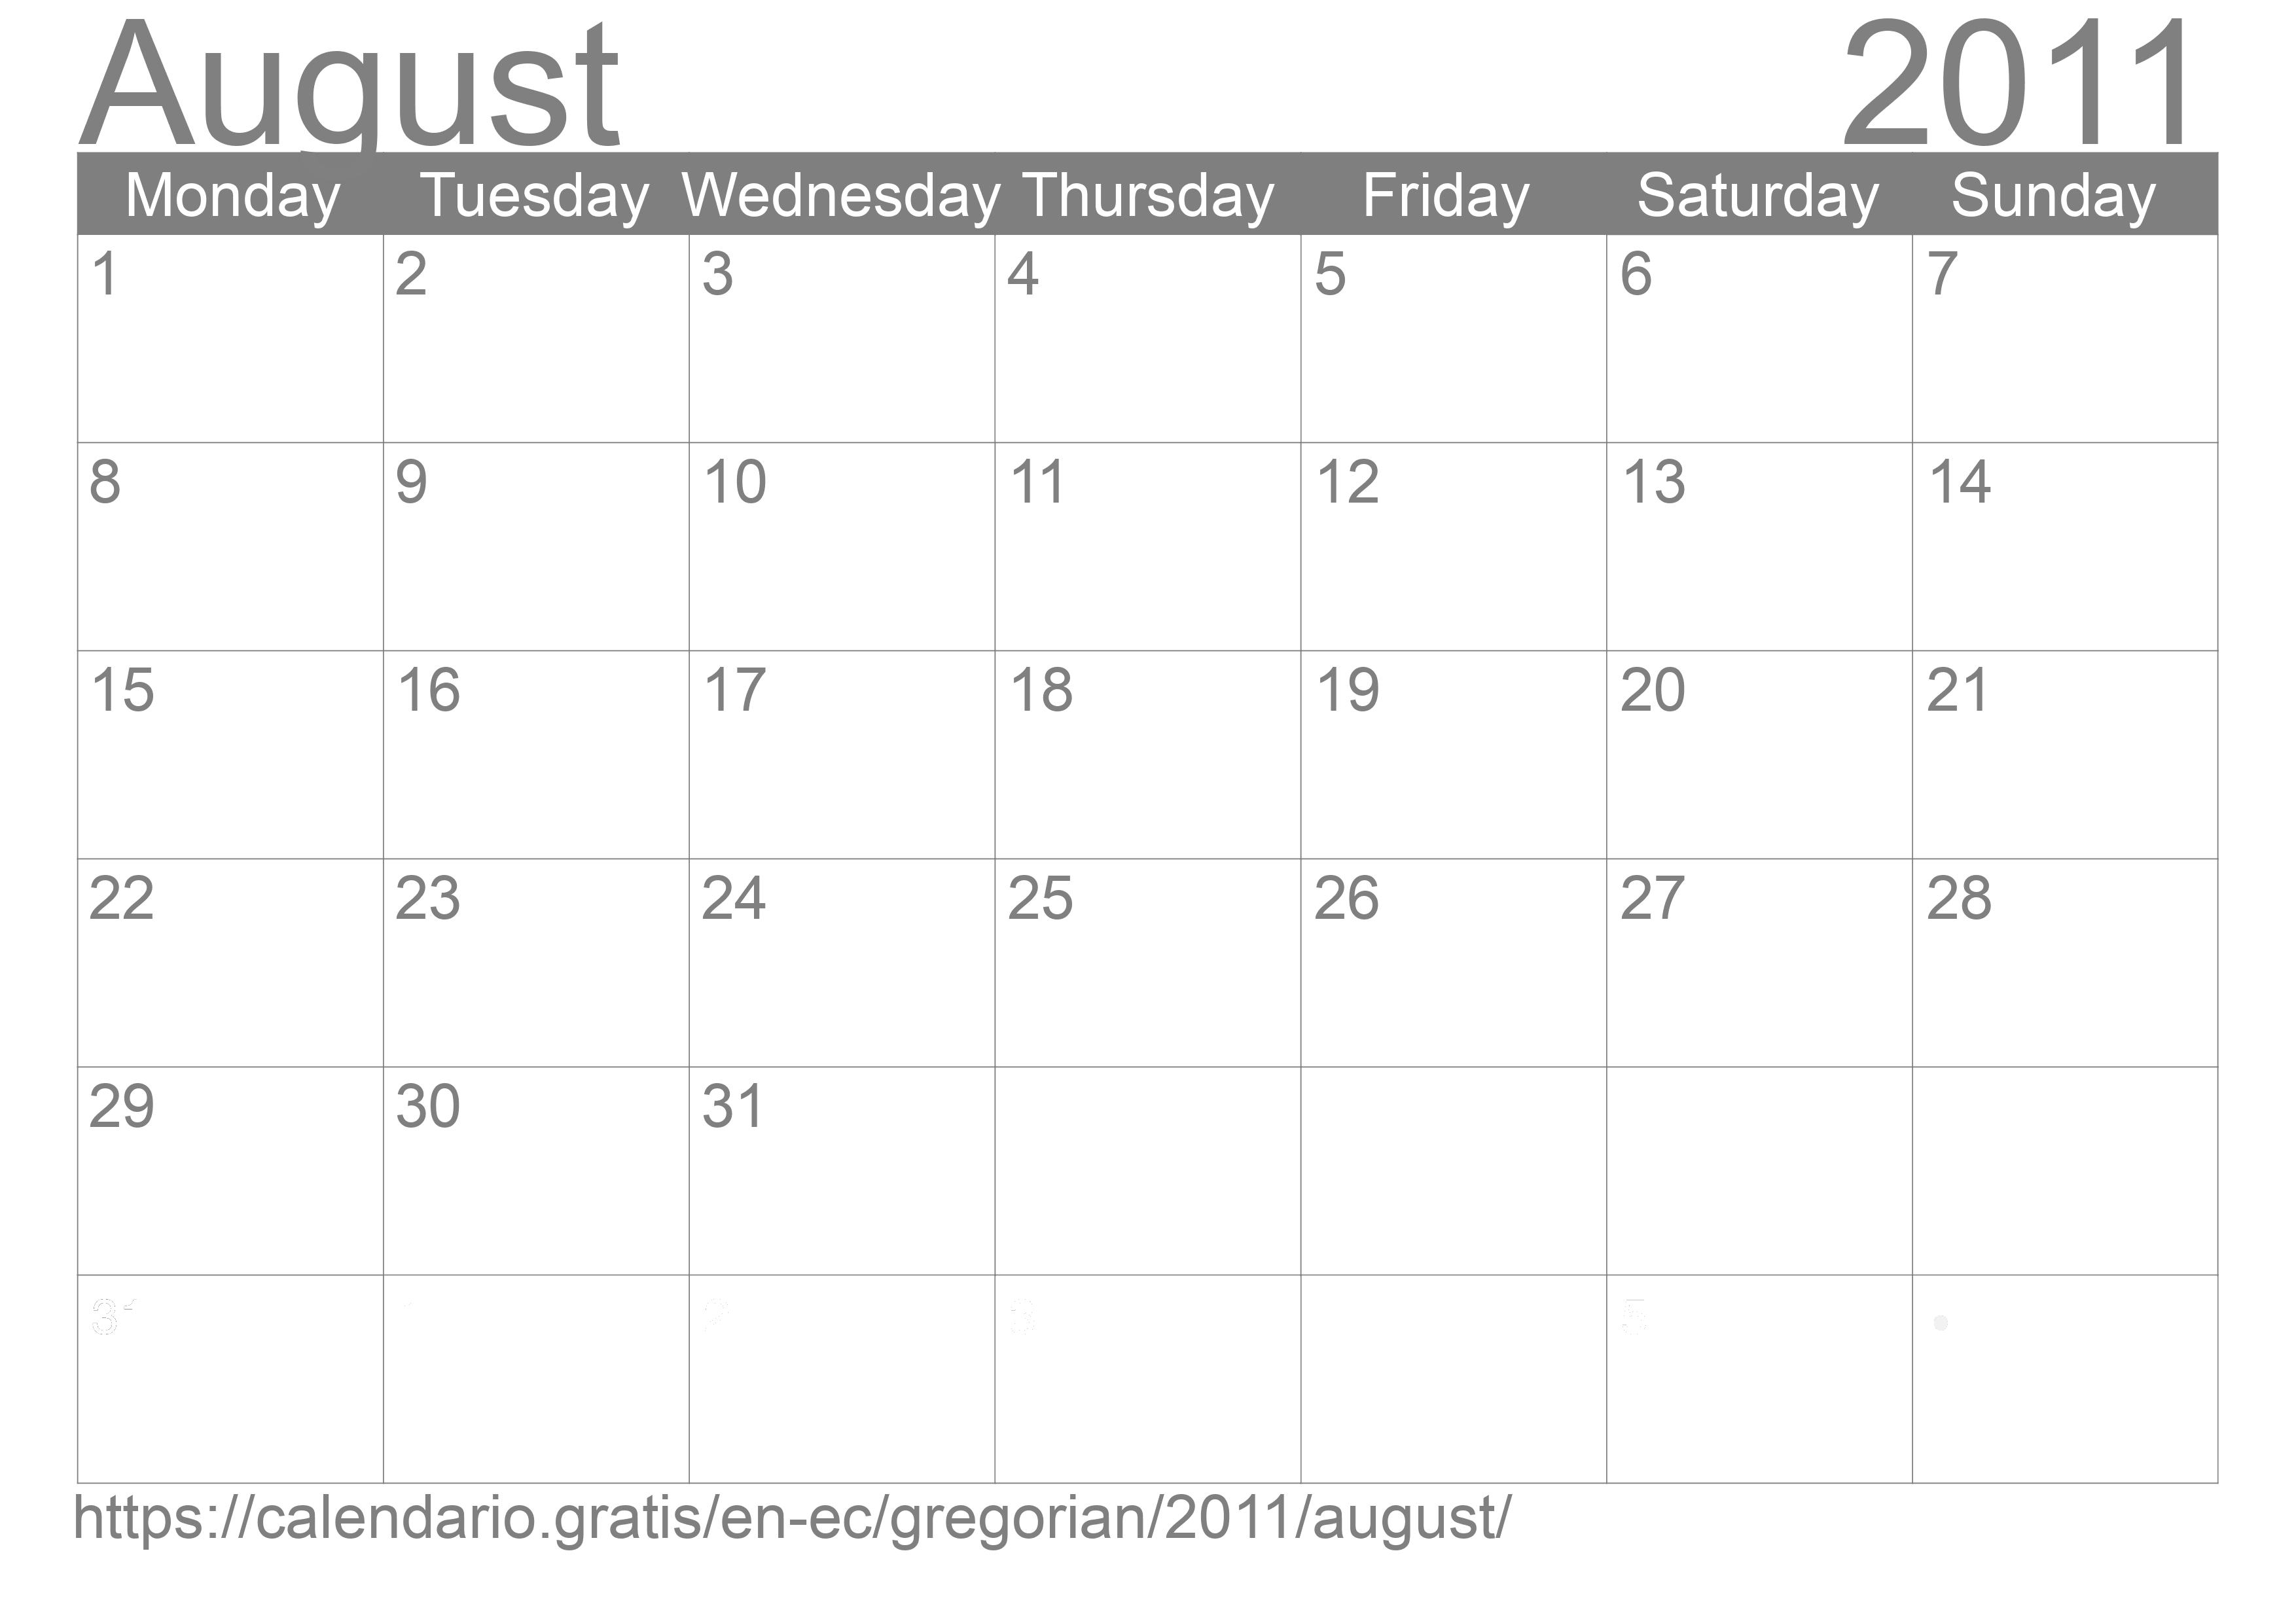 Calendar August 2011 to print